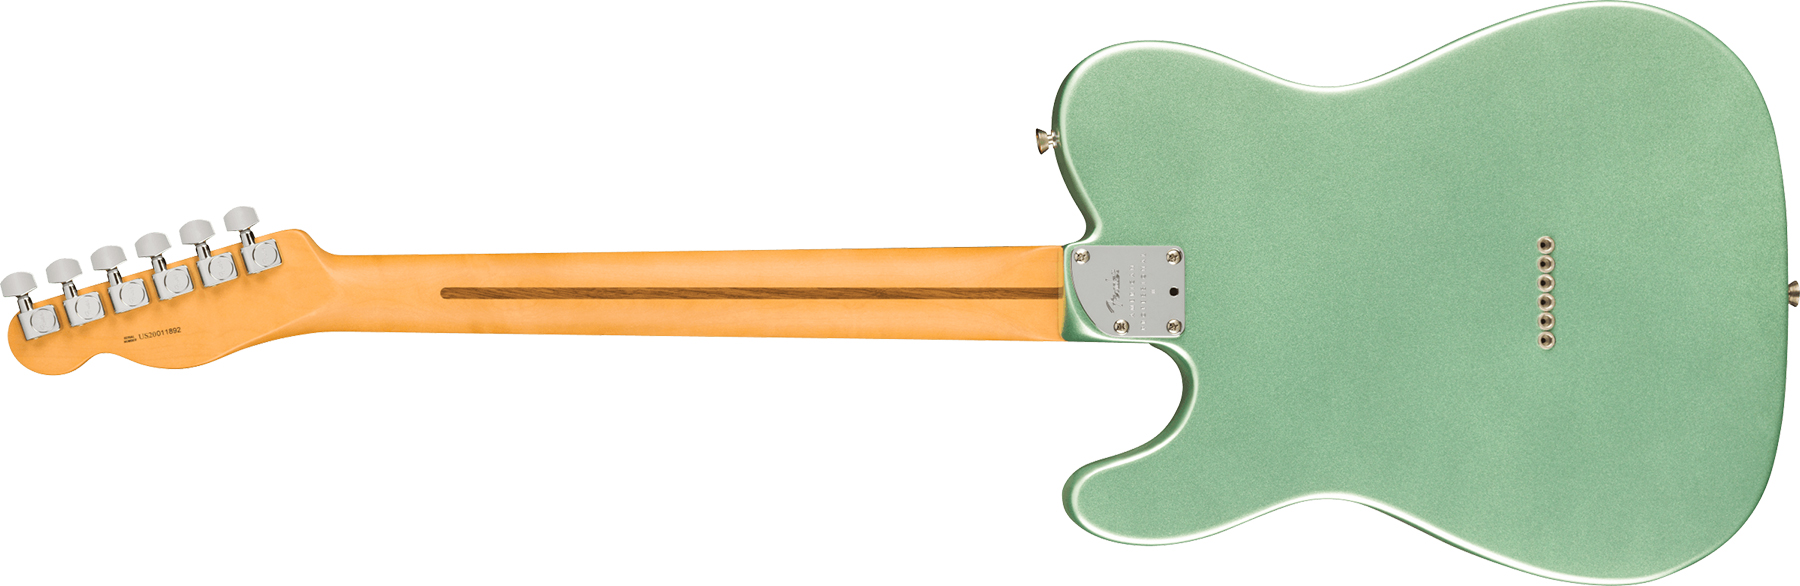 Fender Tele American Professional Ii Usa Rw - Mystic Surf Green - Tel shape electric guitar - Variation 1